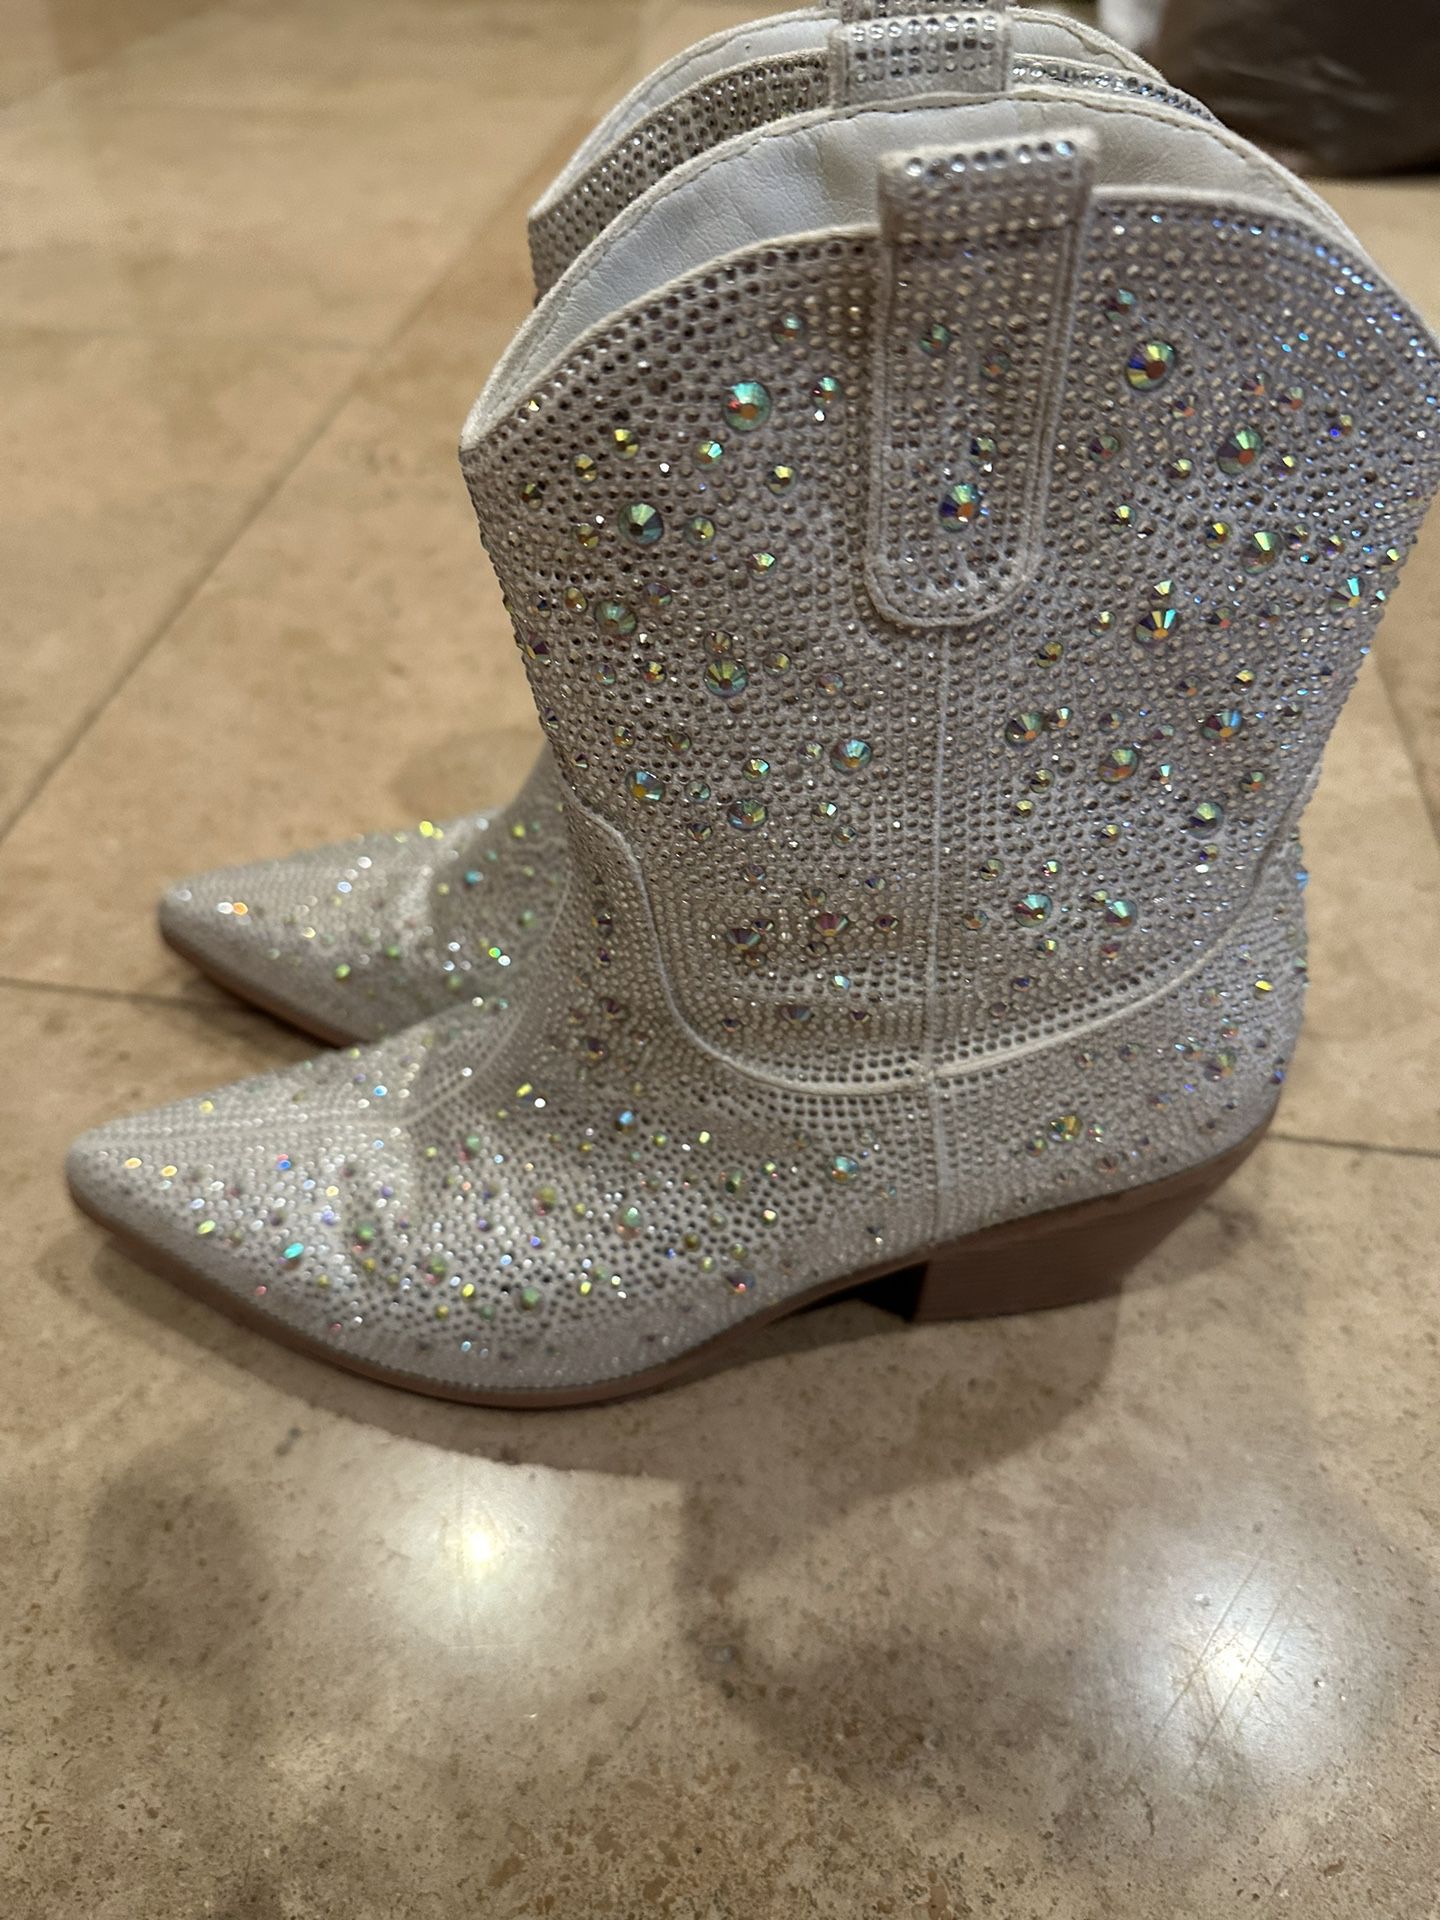 vimitty Women's Rhinestone Glitter Ankle Boots